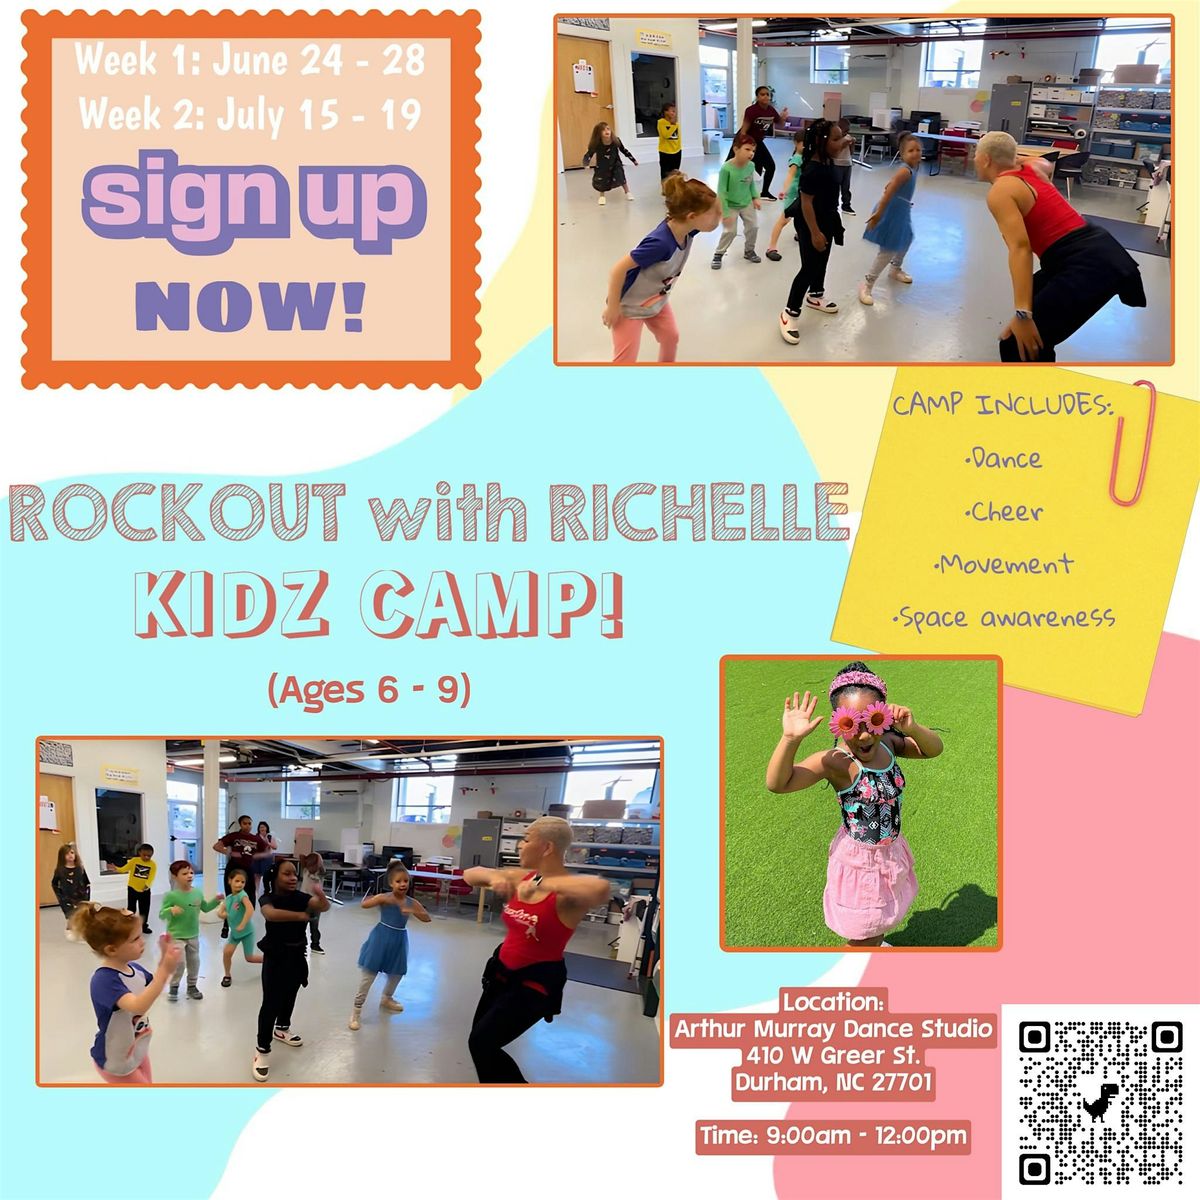 Rockout with Richelle KIDZ Dance & Cheer Camp!